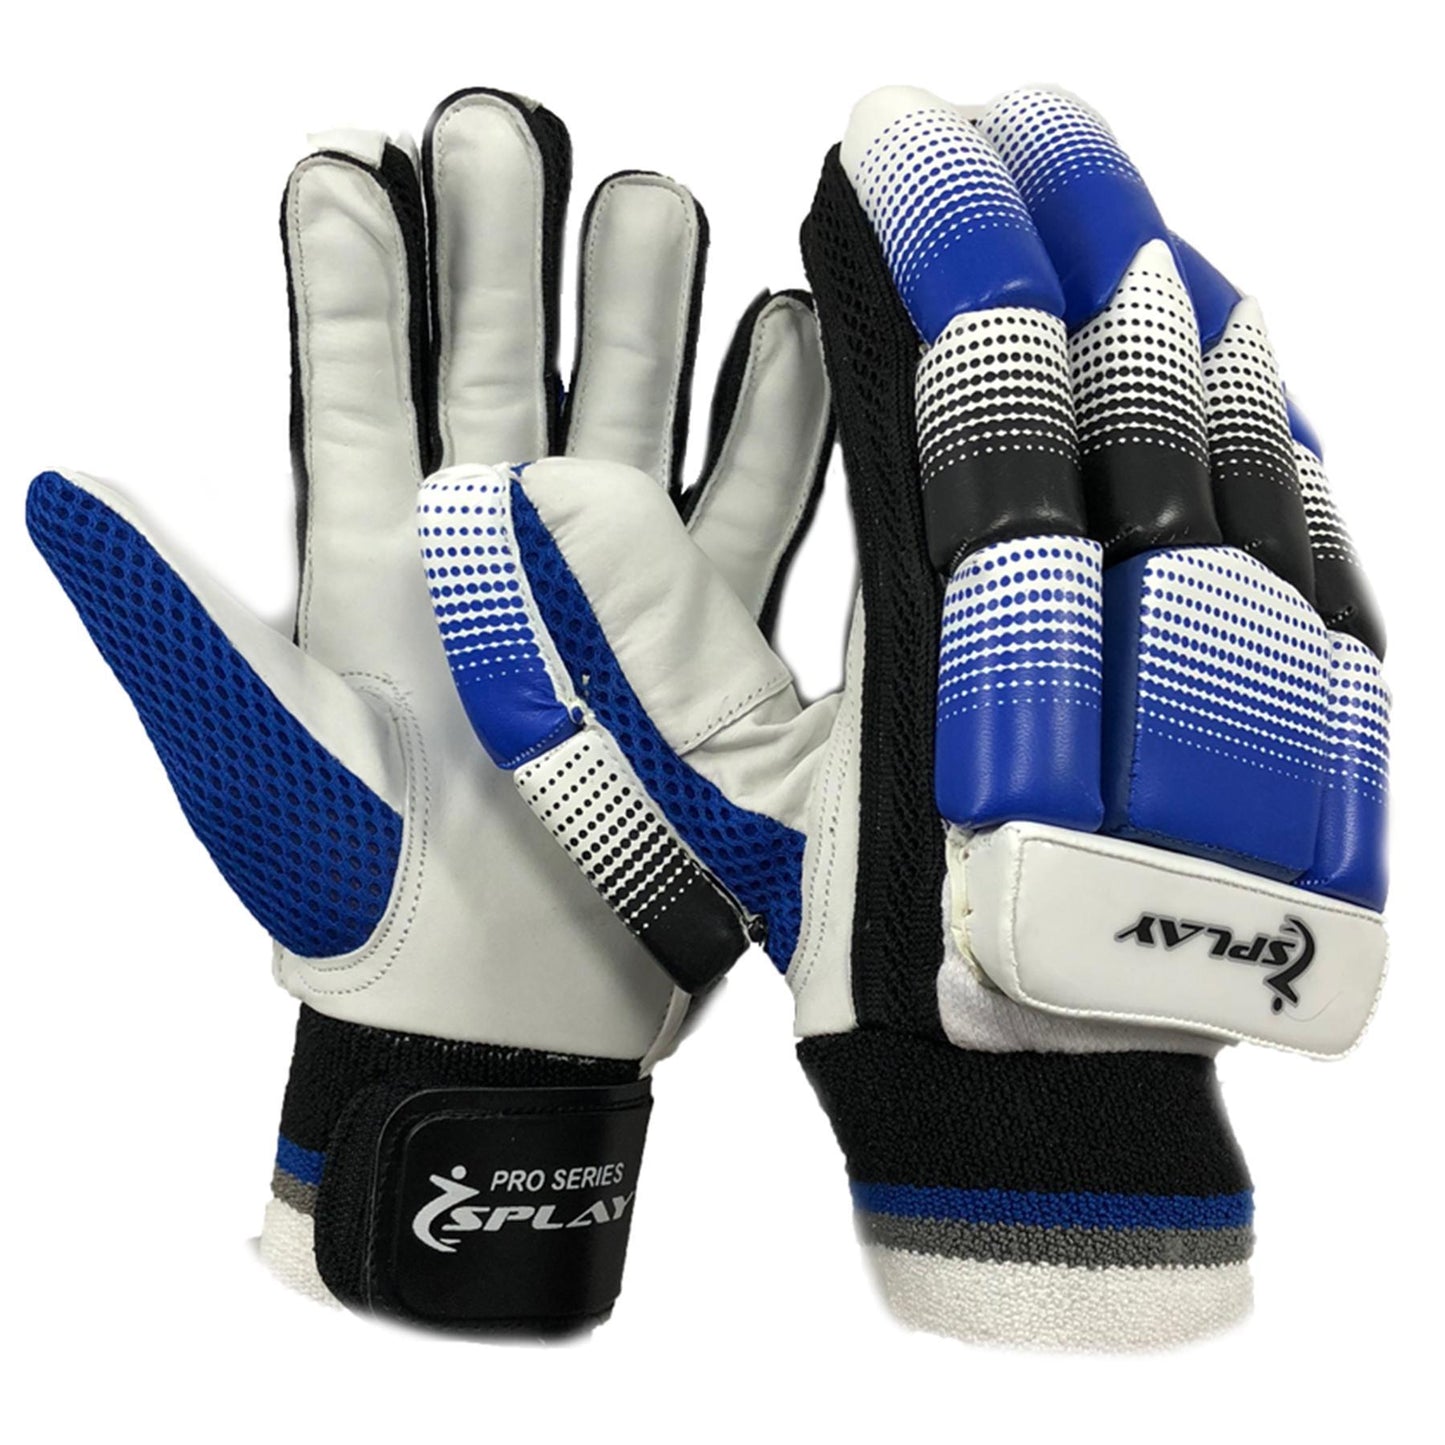 Buy Splay Pro Series Batting Gloves-Cricket Batting Gloves-Splay (UK) Limited-Blue-Men-Right Hand-Splay UK Online